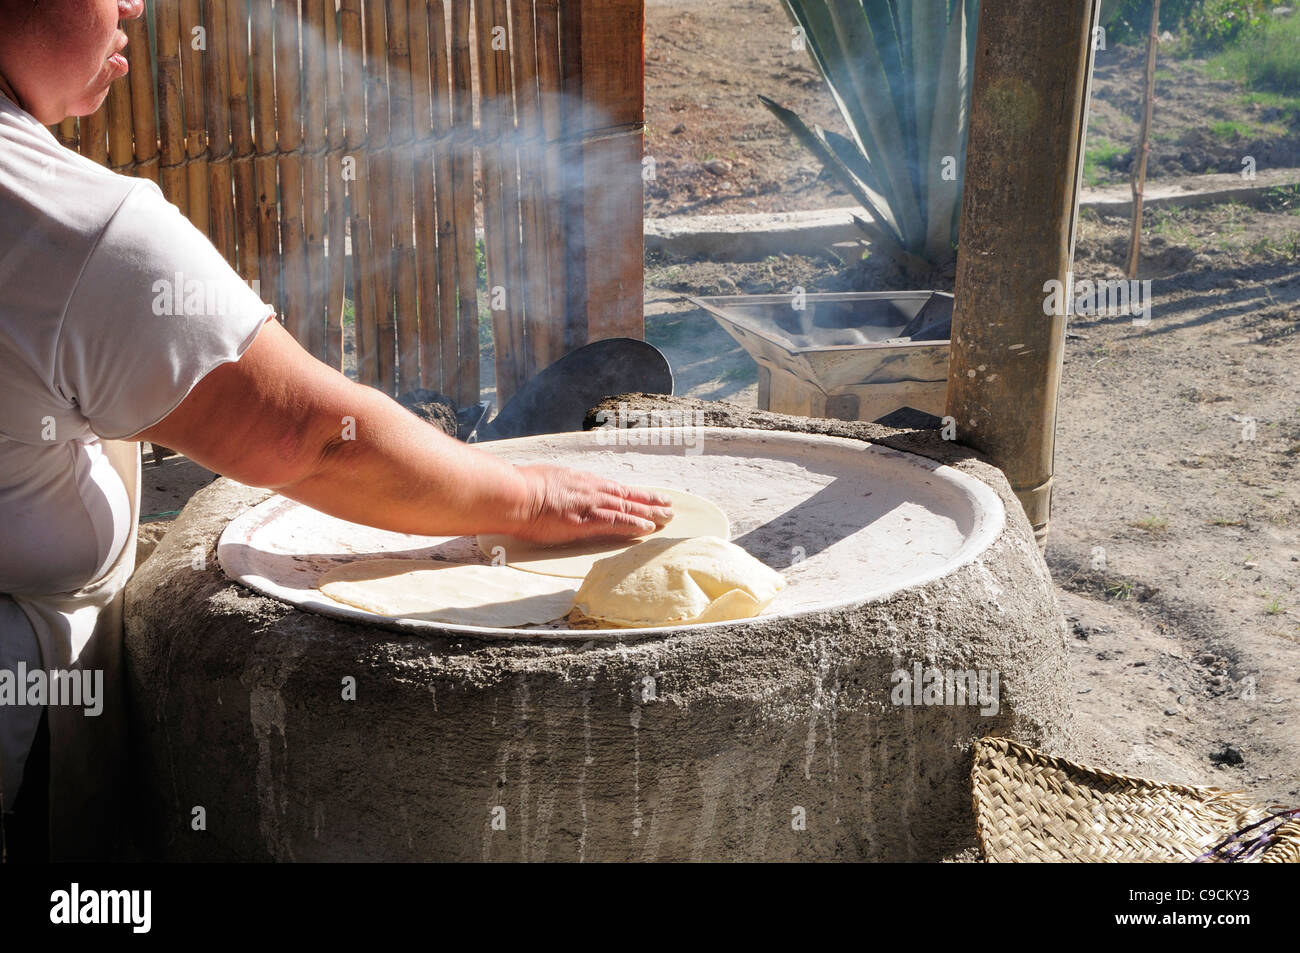 https://c8.alamy.com/comp/C9CKY3/mexico-oaxaca-woman-making-tortillas-outside-on-traditional-comal-C9CKY3.jpg